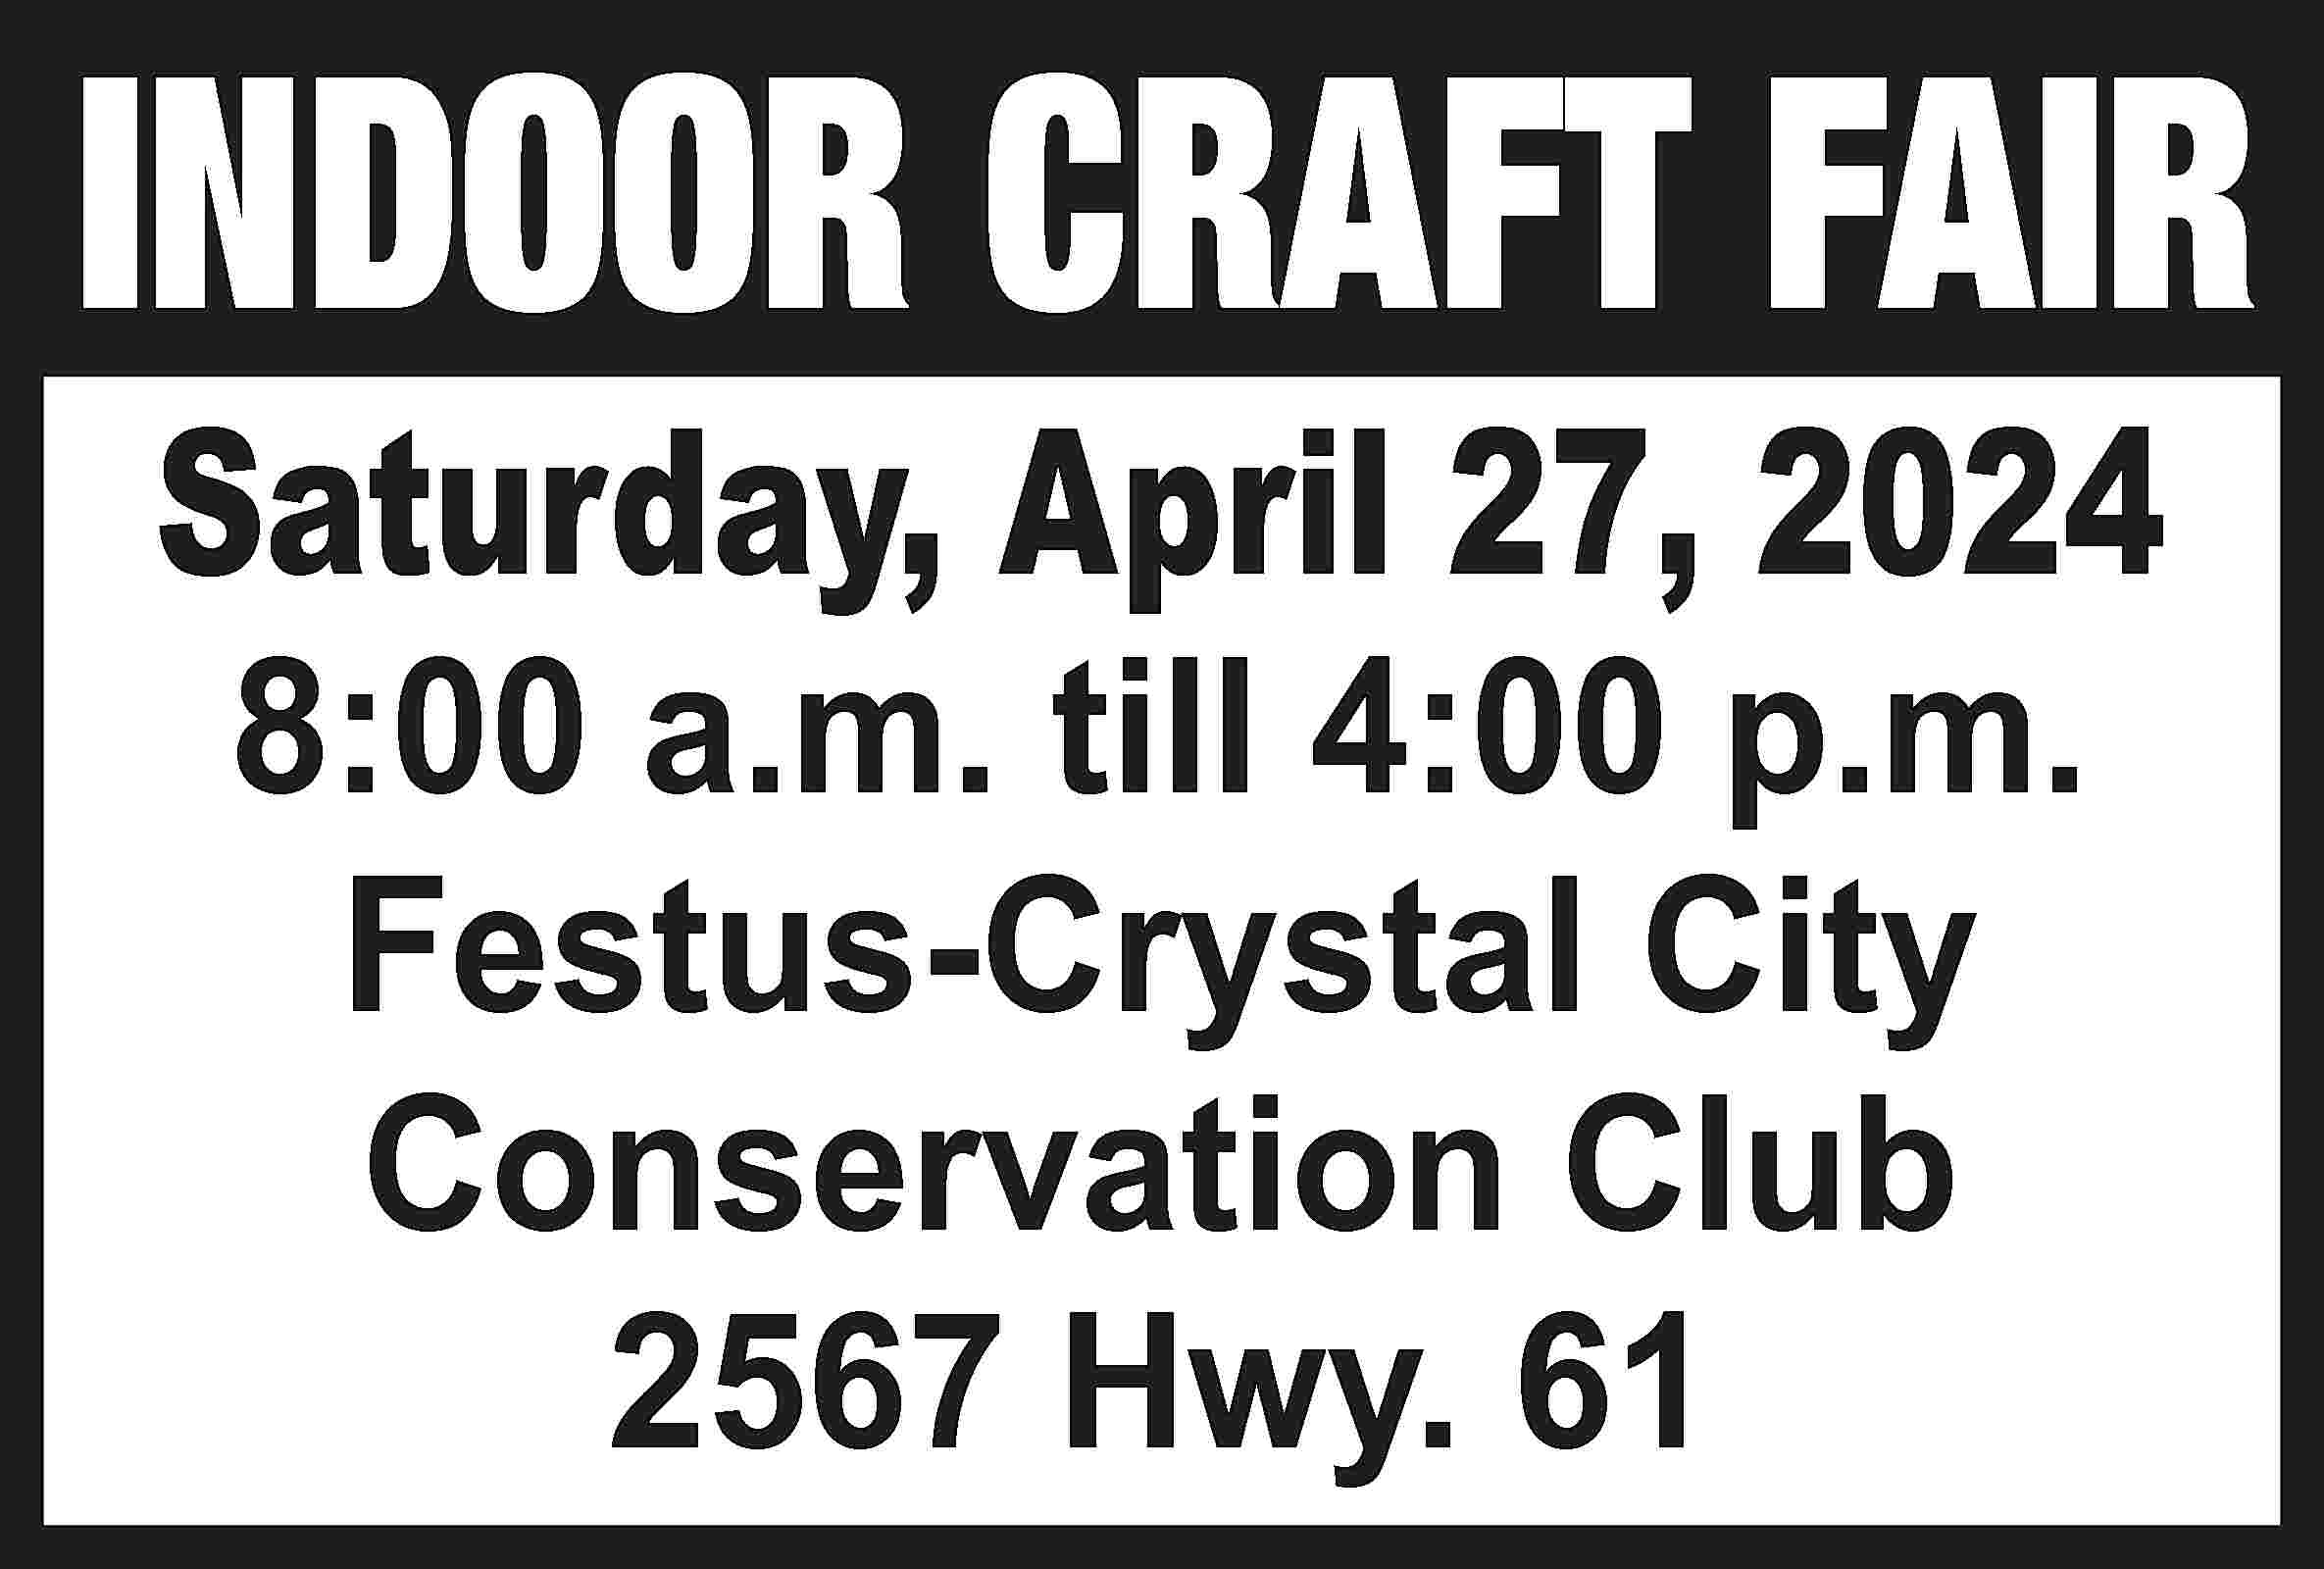 INDOOR CRAFT FAIR Saturday, April  INDOOR CRAFT FAIR Saturday, April 27, 2024 8:00 a.m. till 4:00 p.m. Festus-Crystal City Conservation Club 2567 Hwy. 61